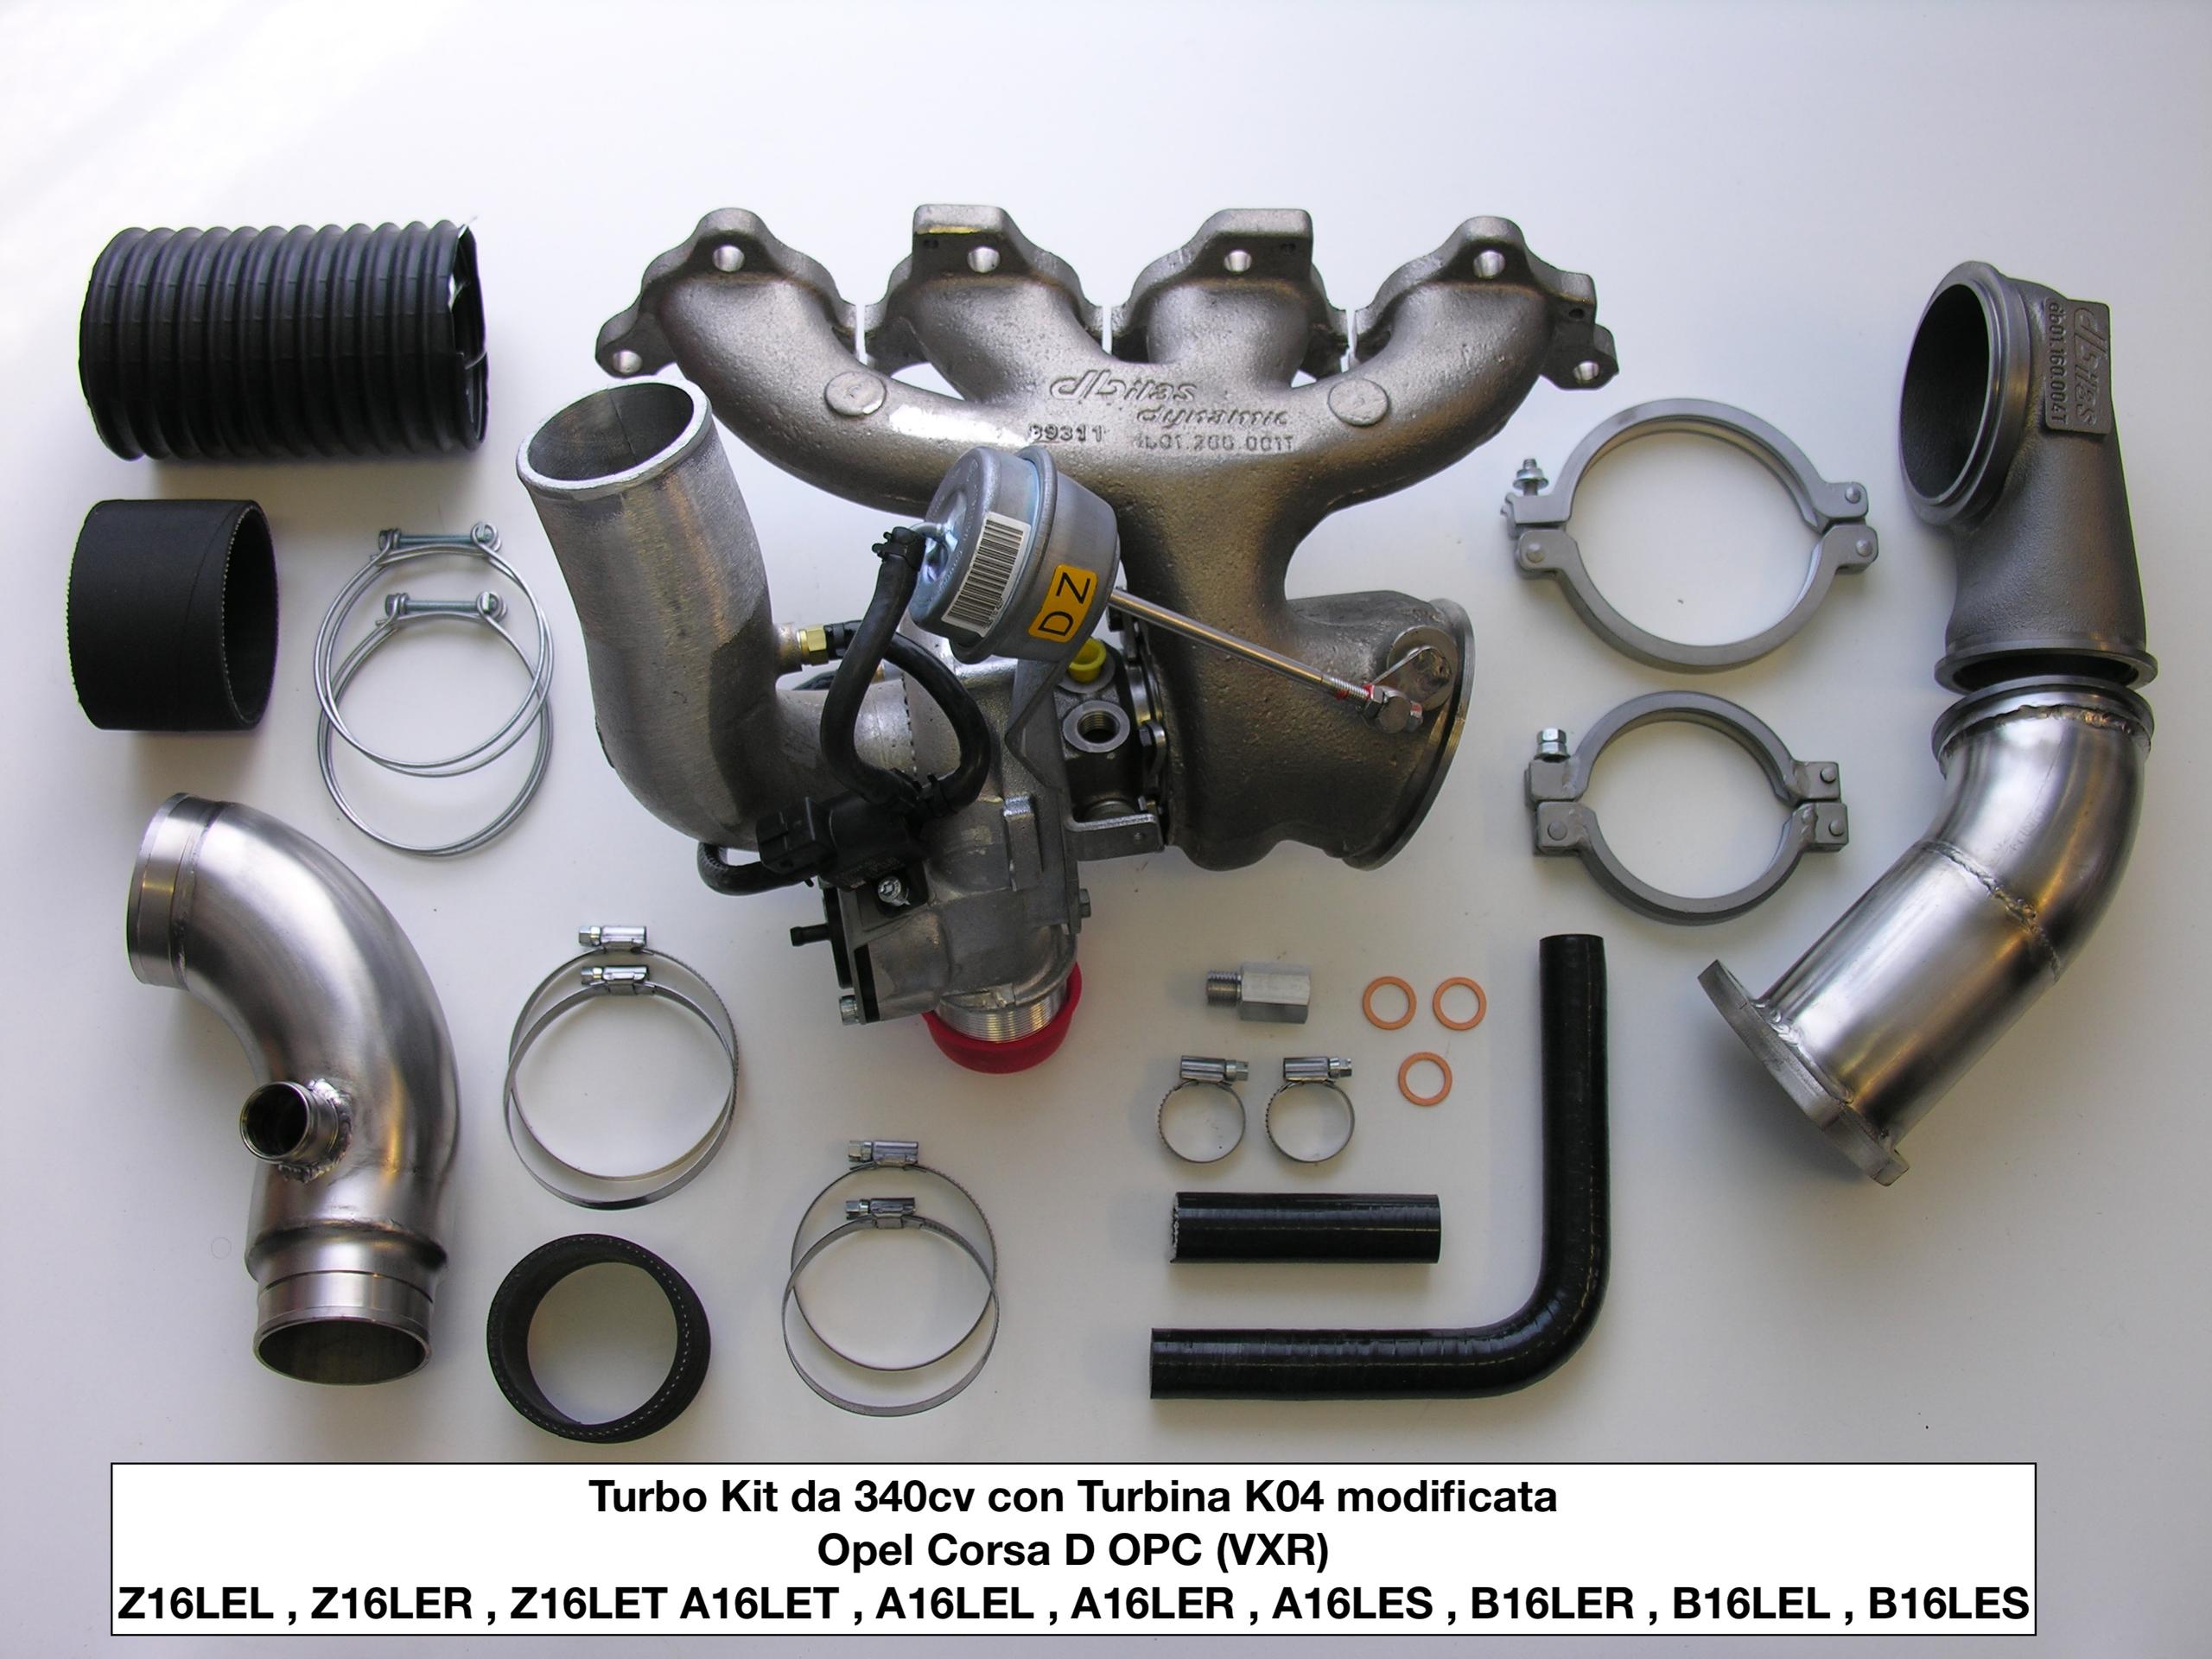 Opel Corsa D OPC 1.6 Turbo ( anche GSI ) - Turbo Kit Upgrade ( vari step )